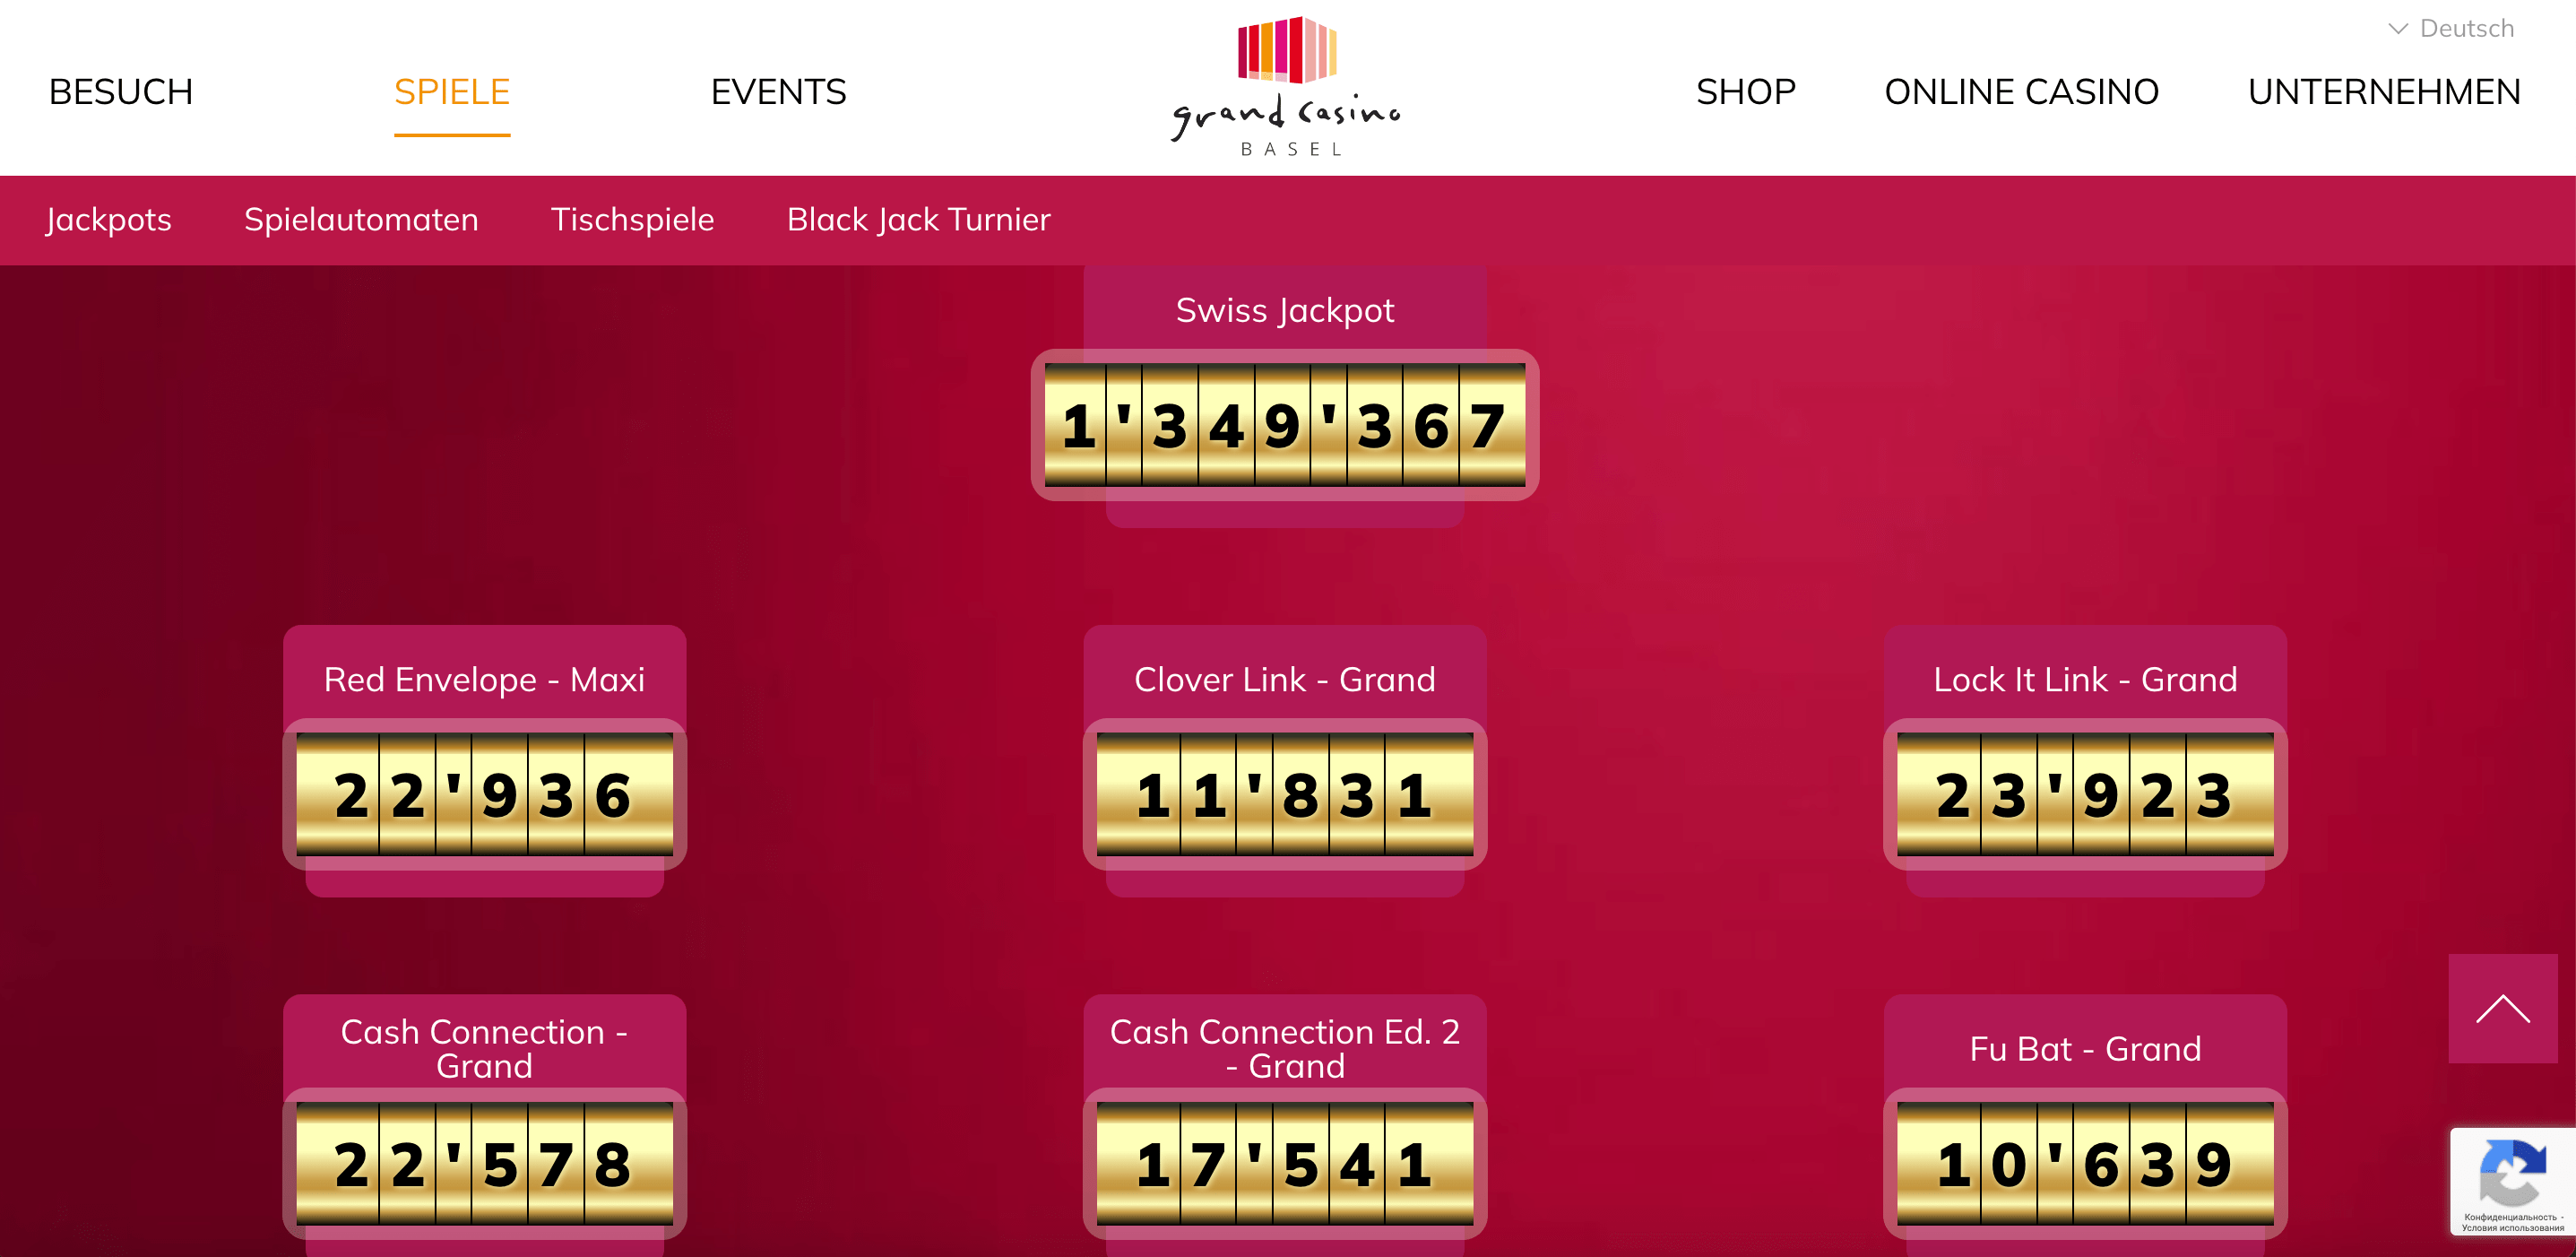 casino basel online